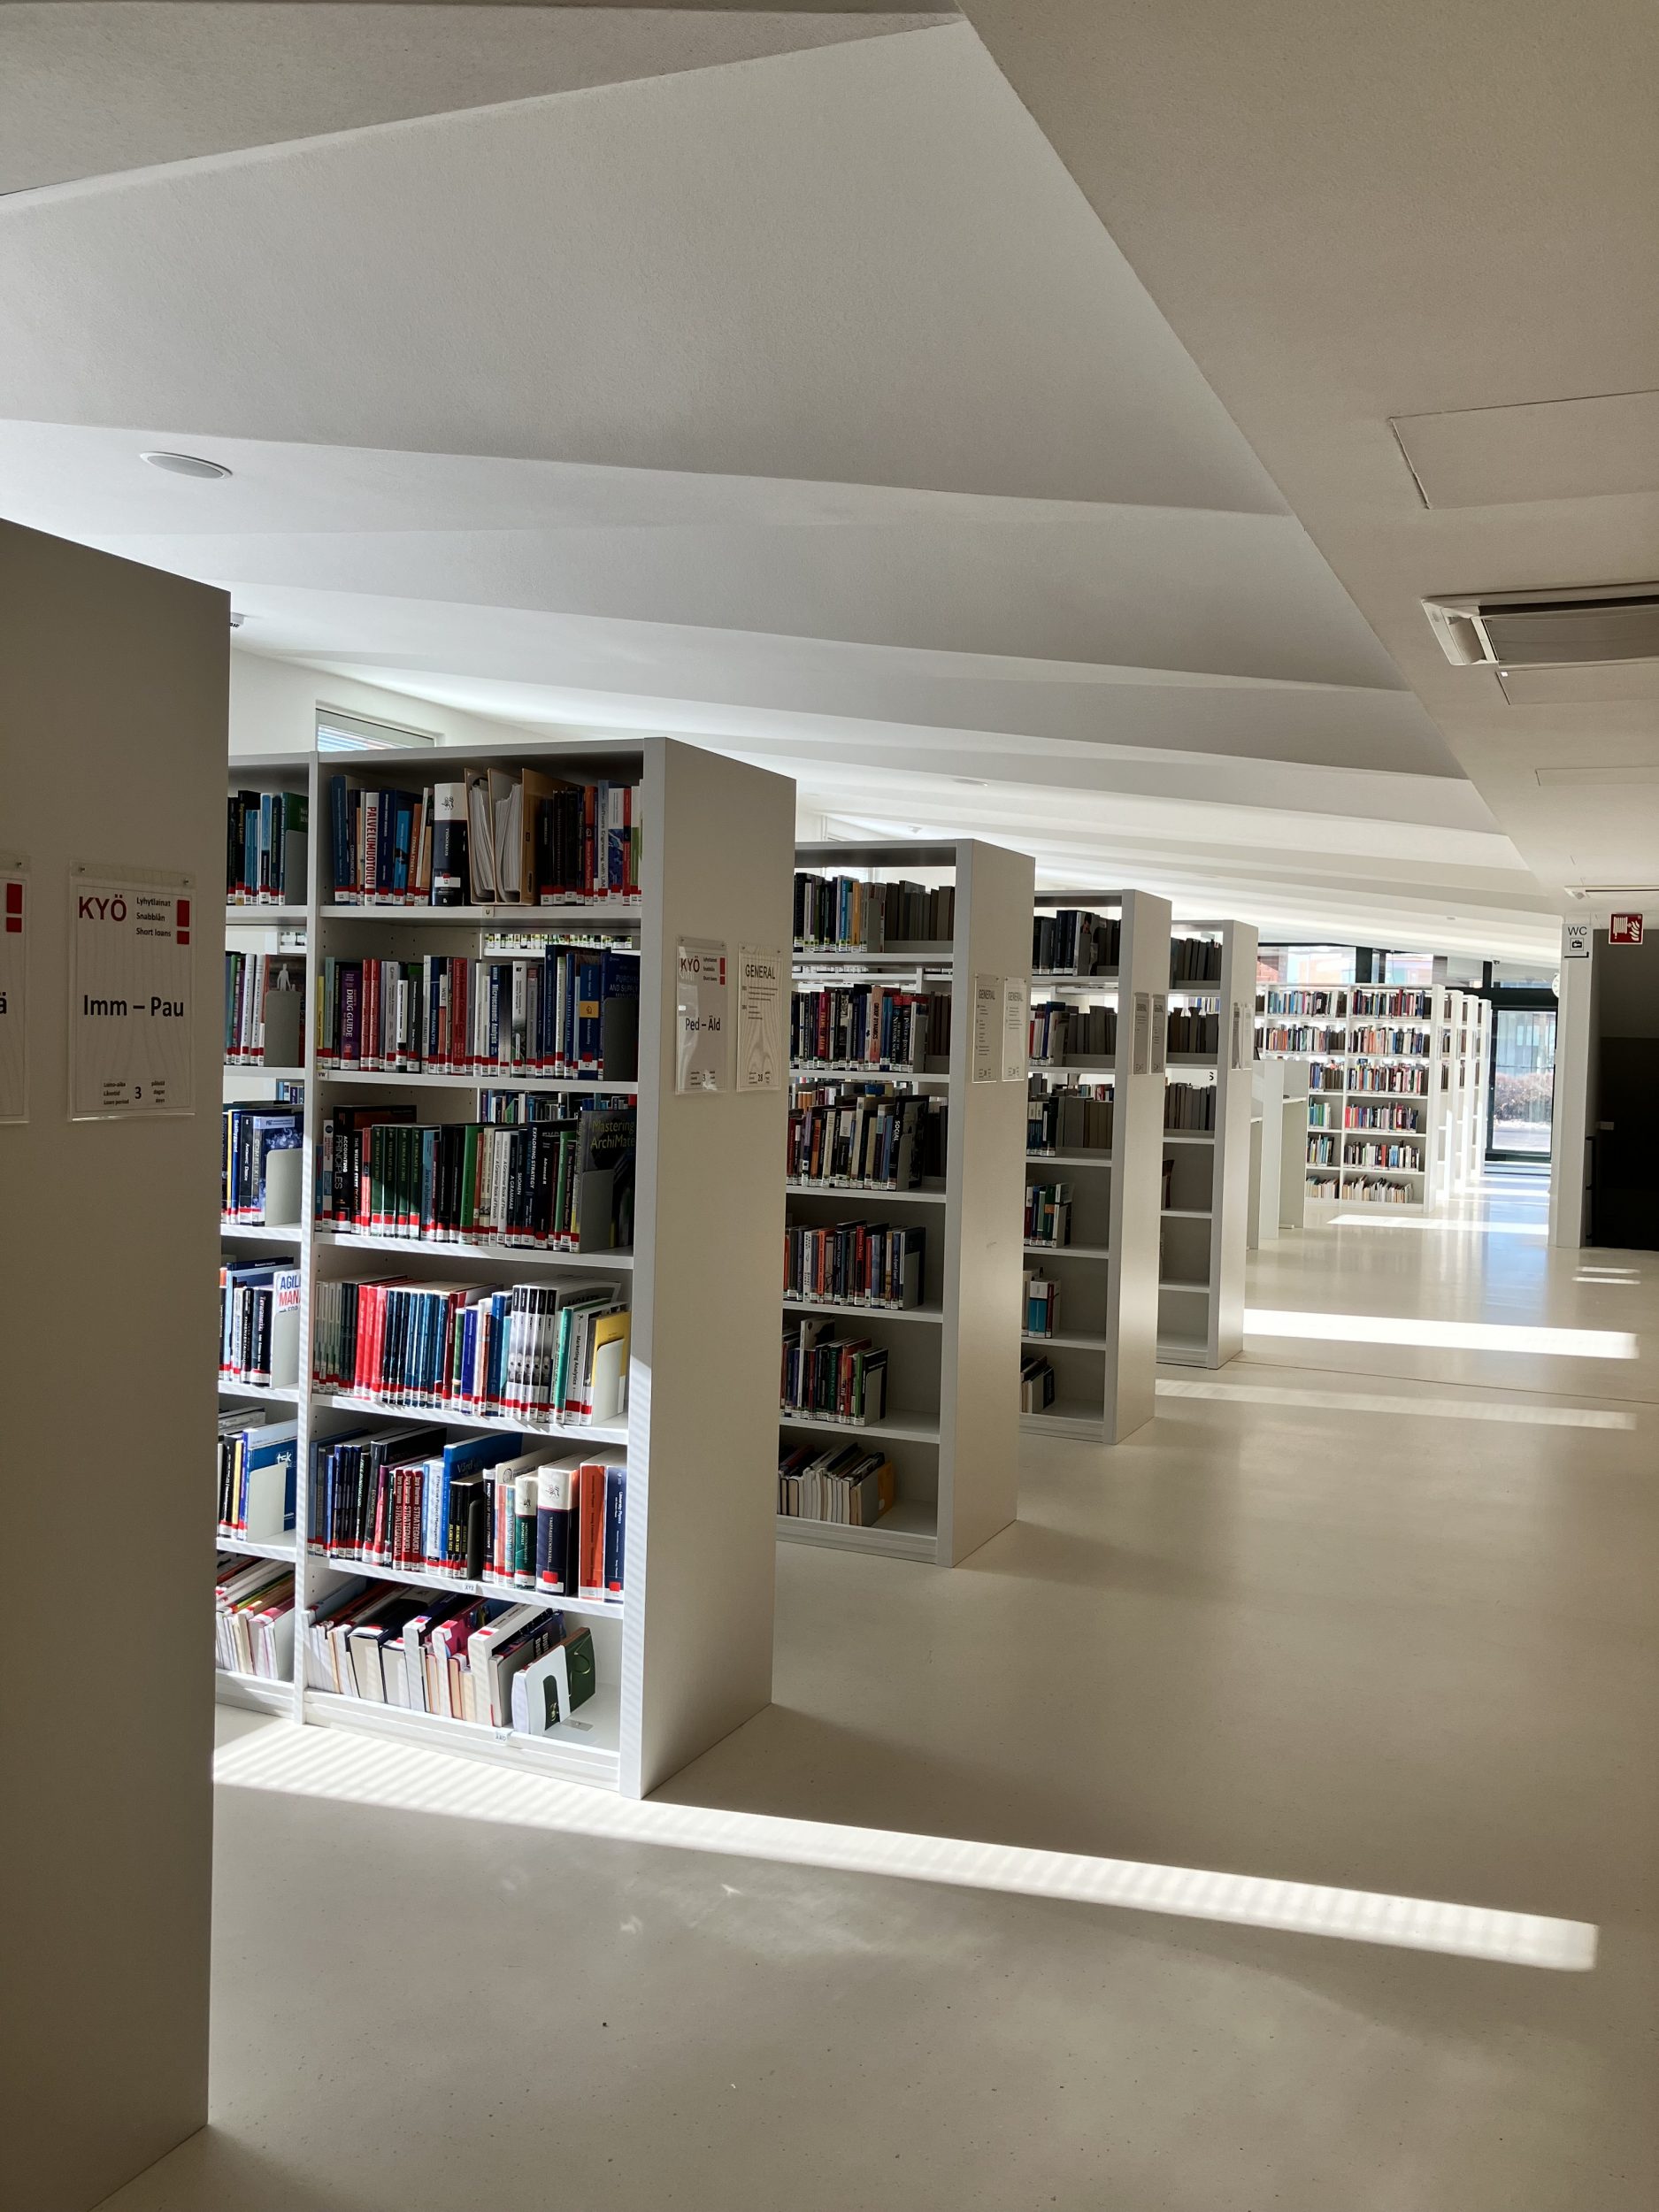 Kirjasto, kirjahyllyt, kirjat, katto. Library, book shelves, books, ceiling.